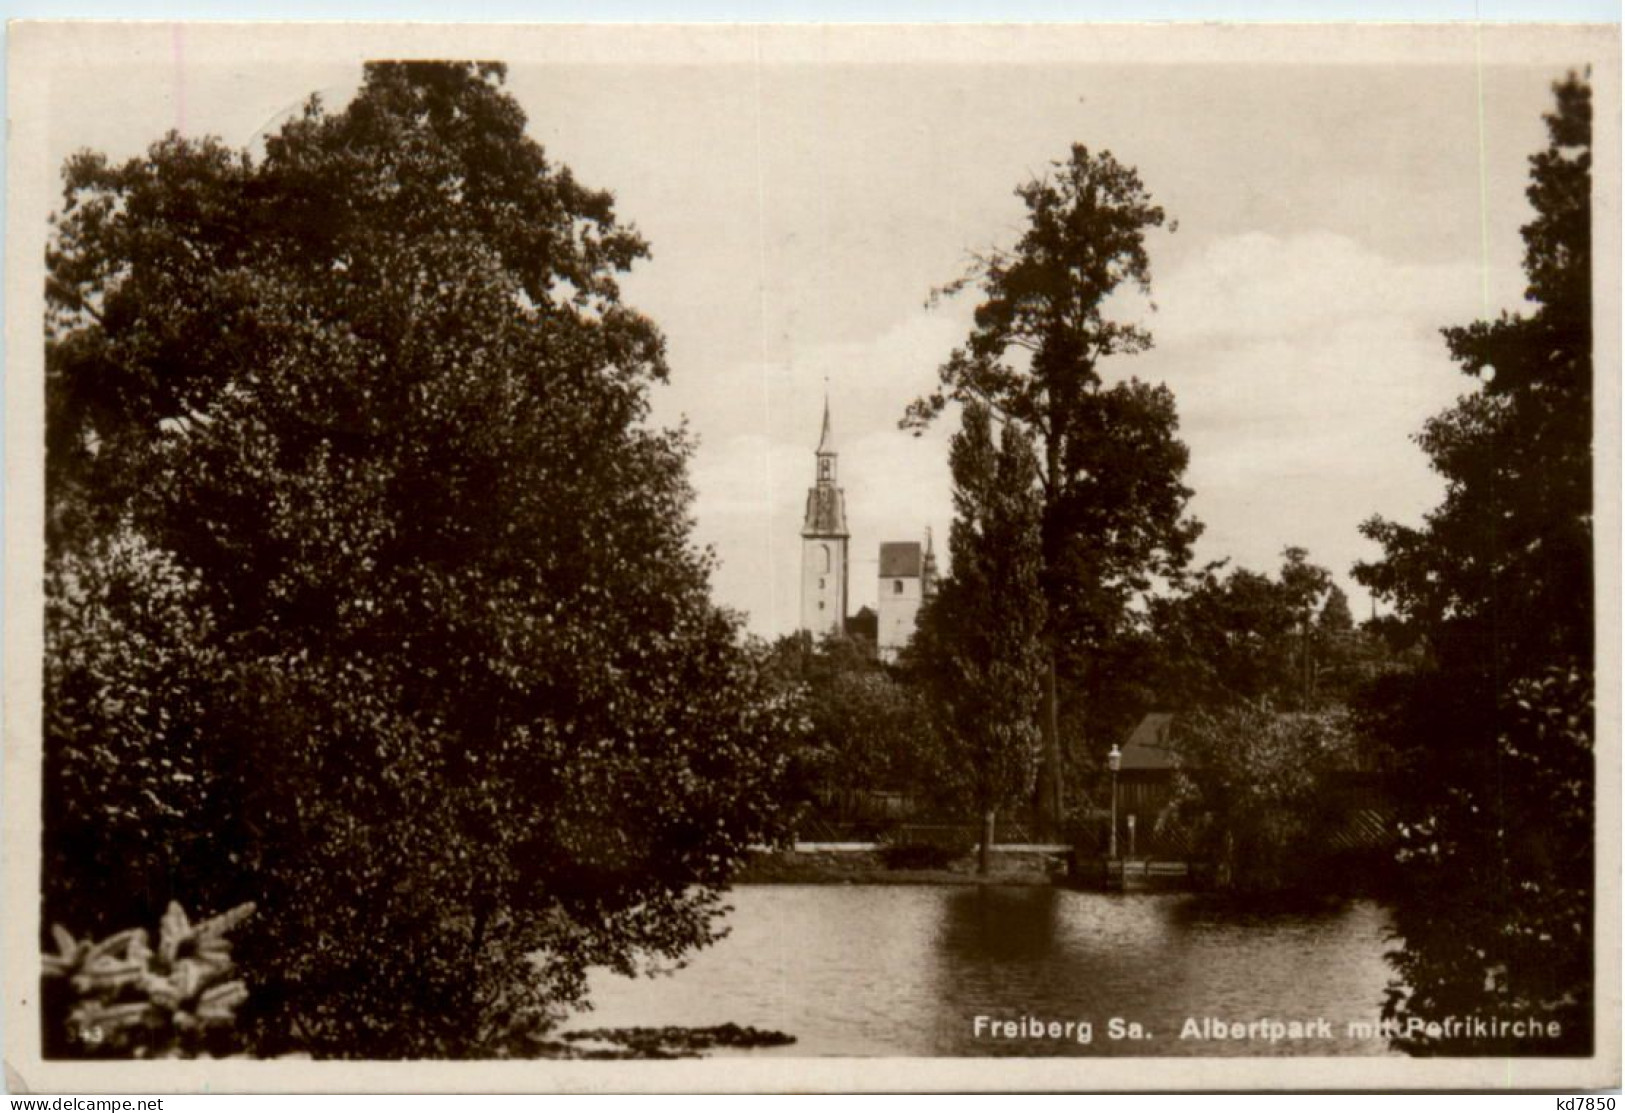 Freiberg, Albertpark Mit Petrikirche - Freiberg (Sachsen)